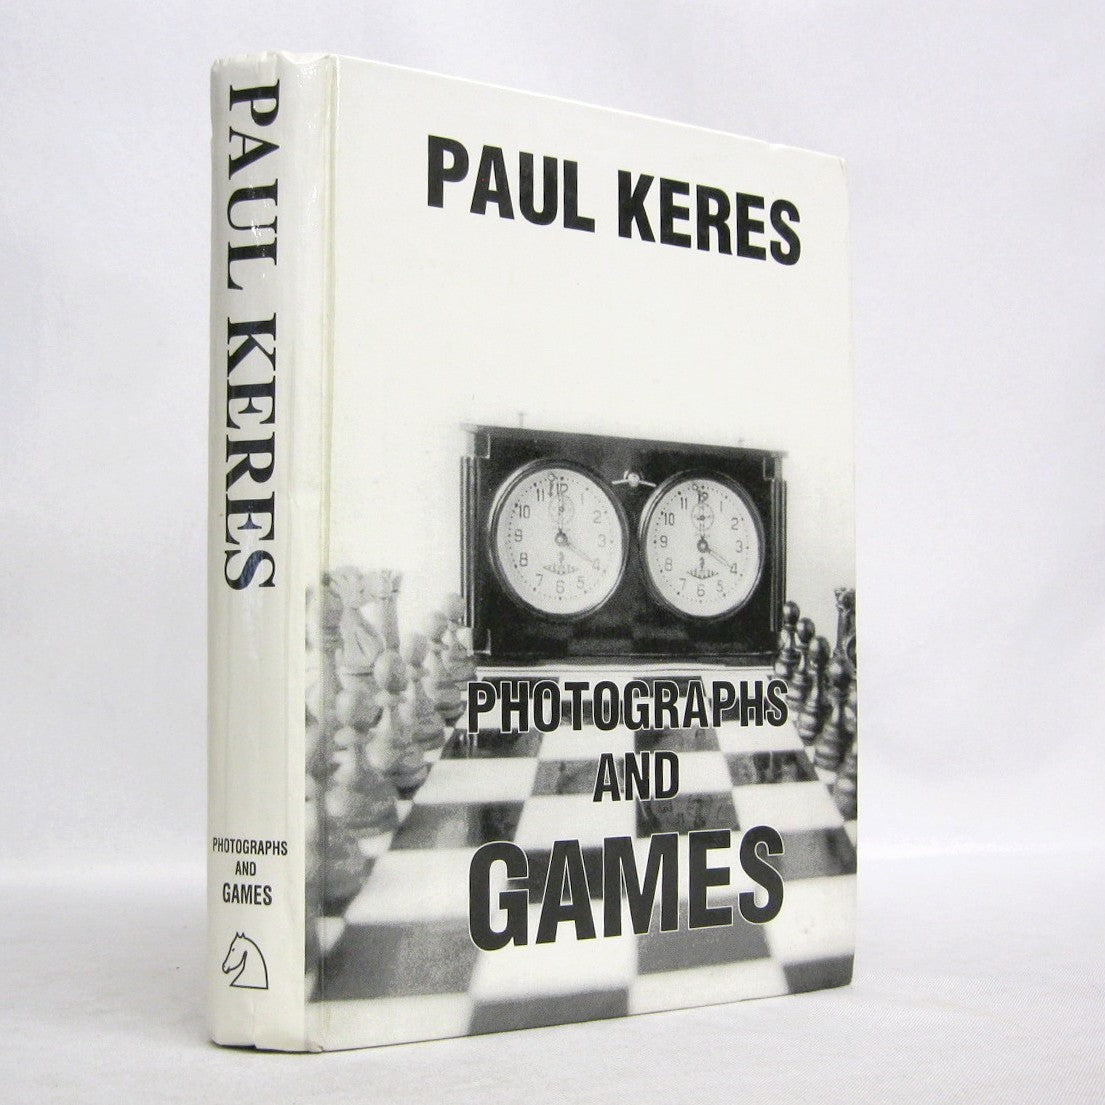 Paul Keres IV: The War Years